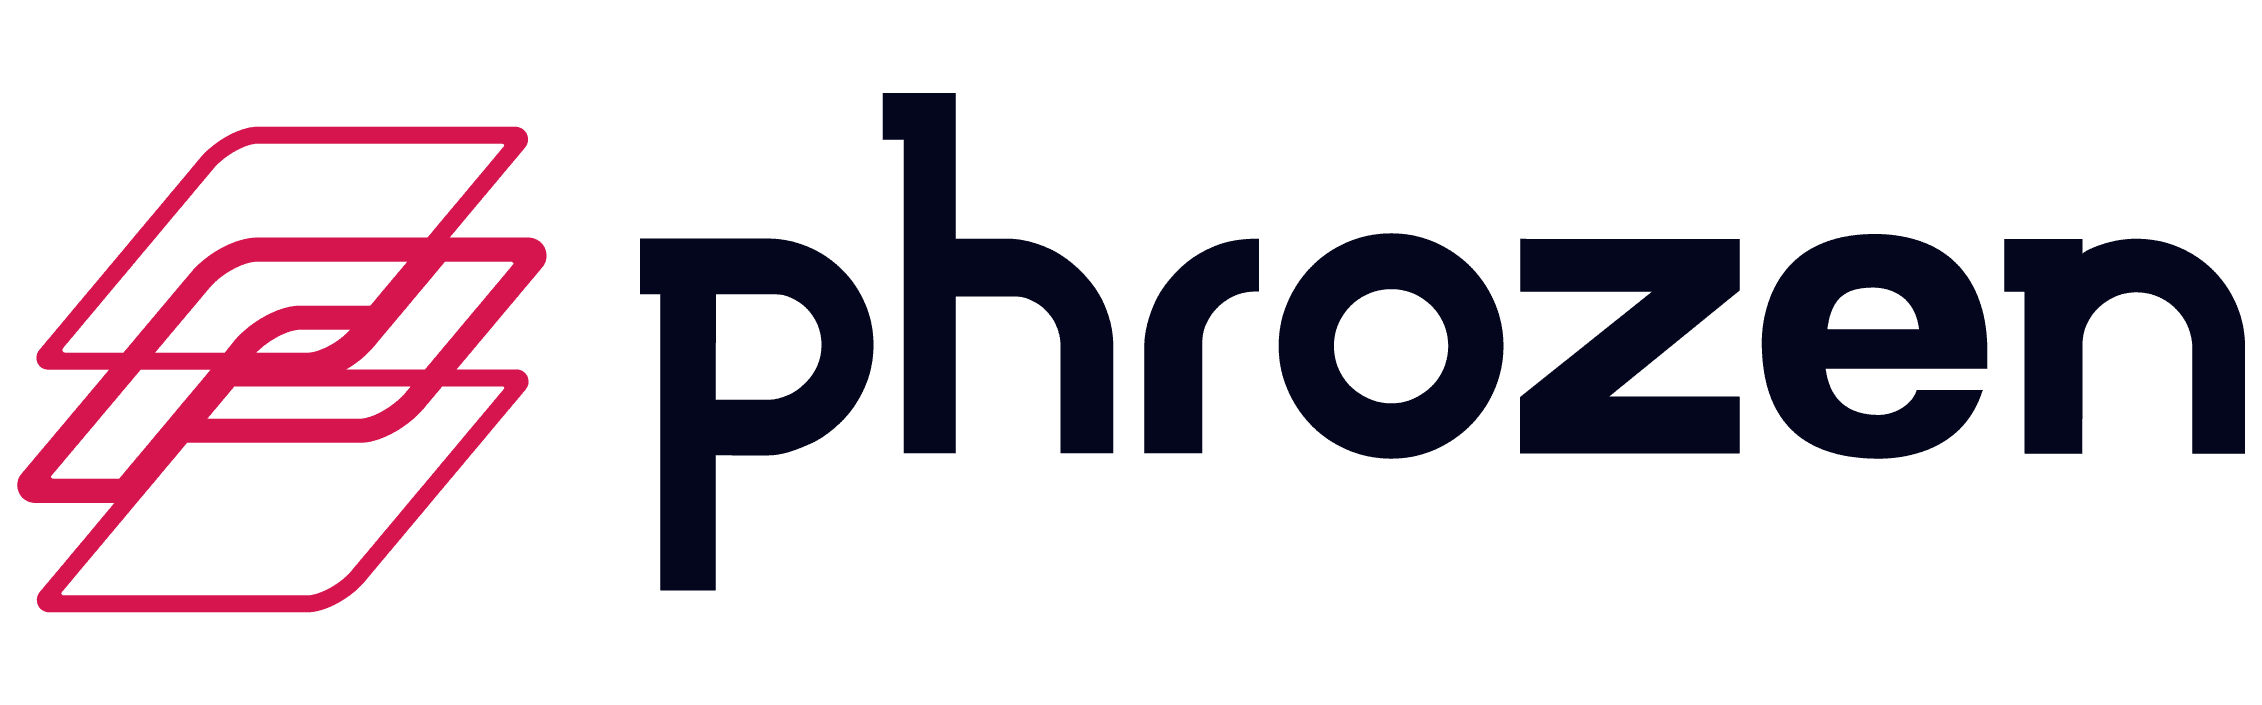 Phrozen logo